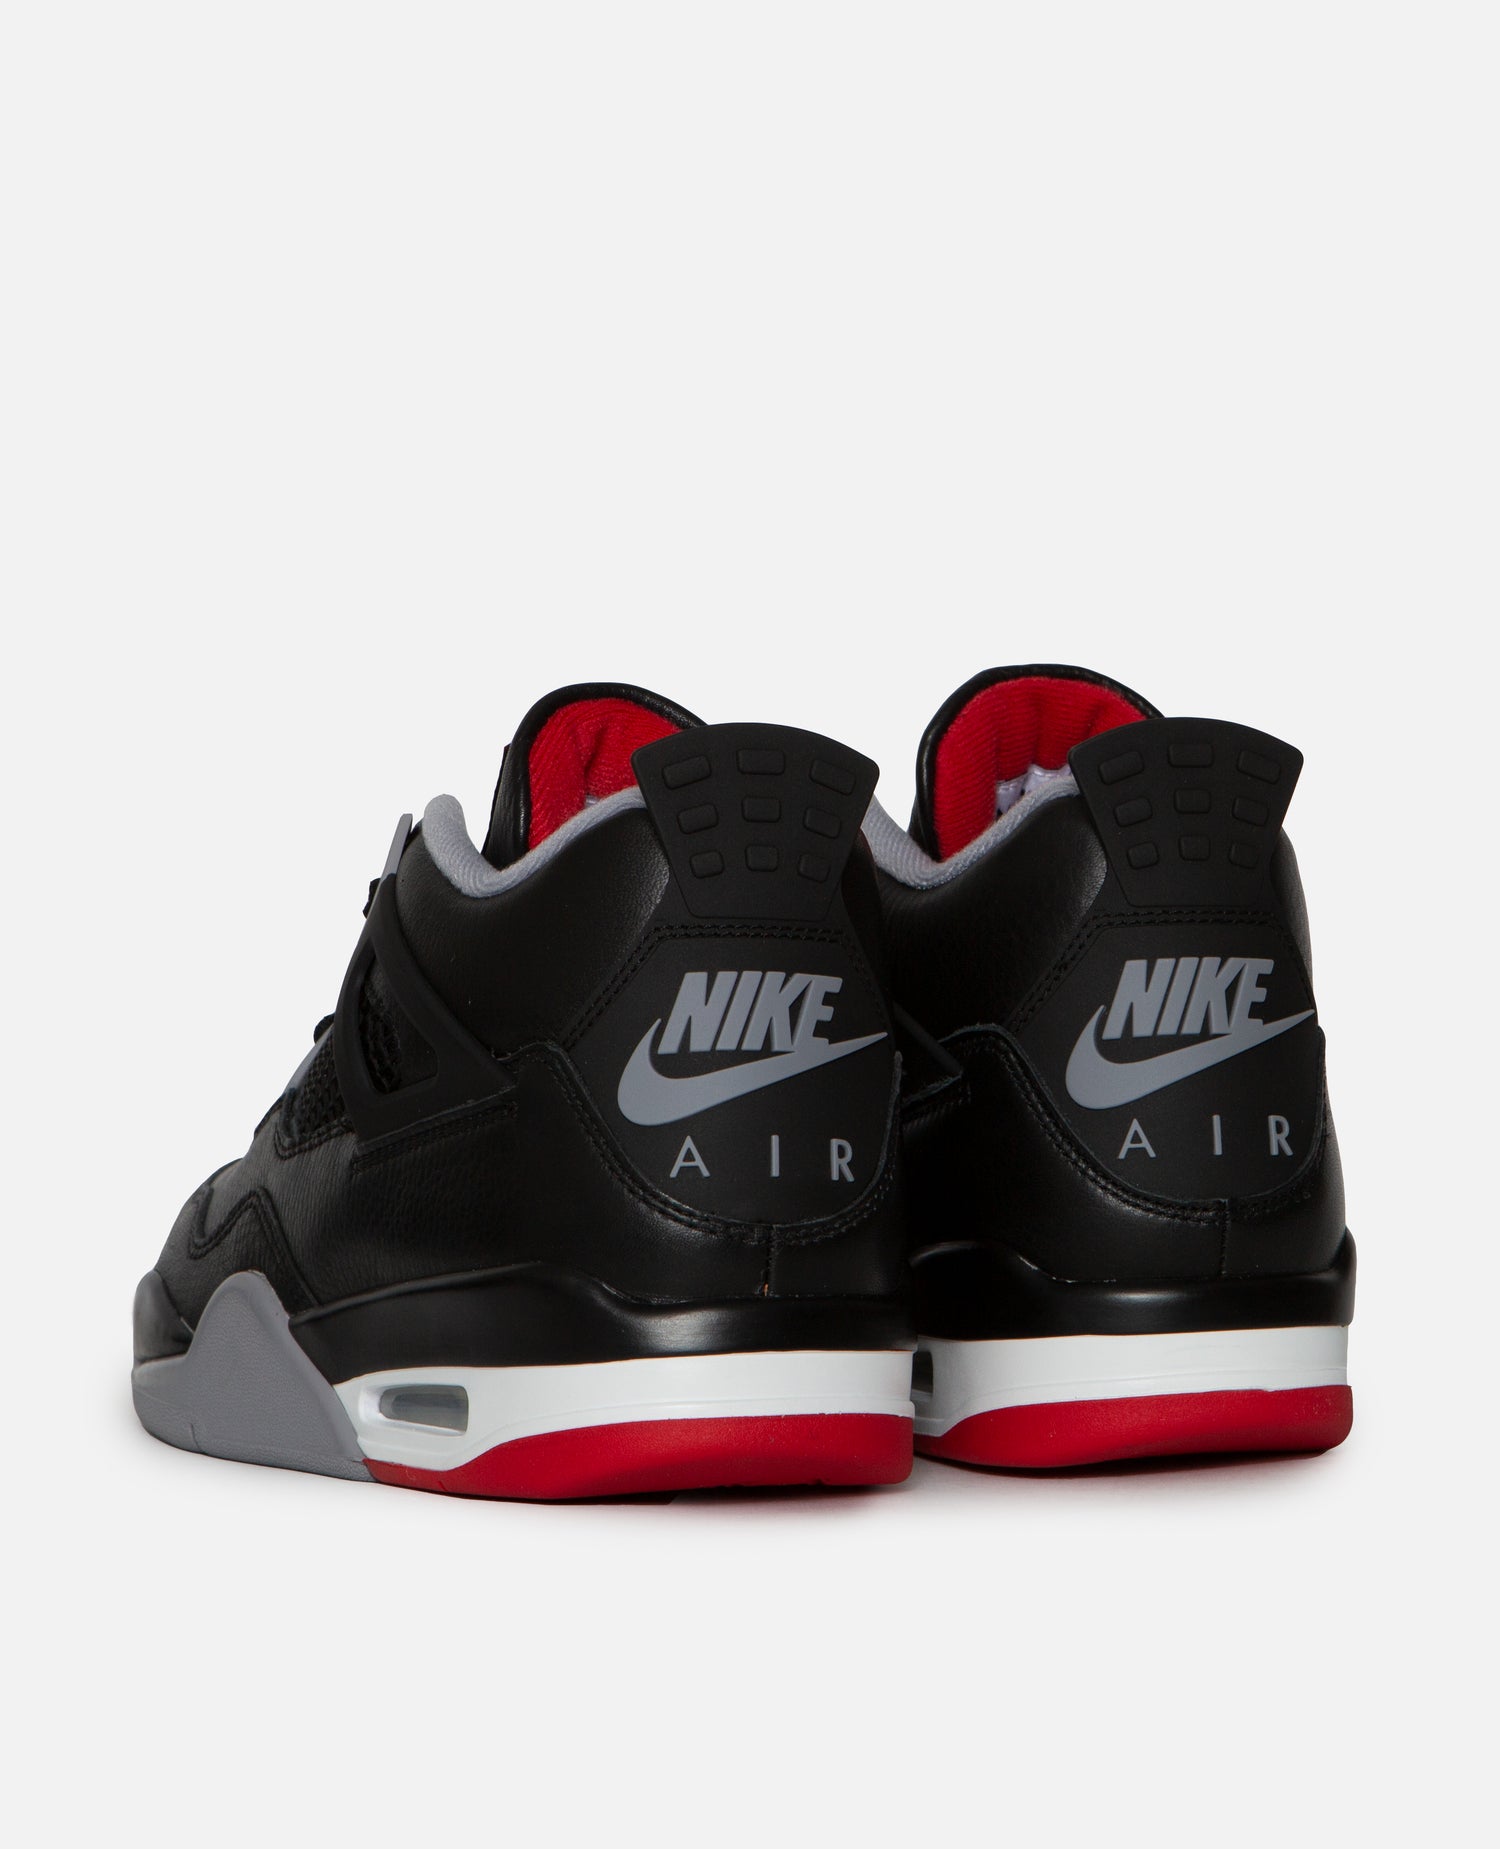 Nike Air Jordan 4 Retro (Black/Fire Red-Cement Grey-Summit White)